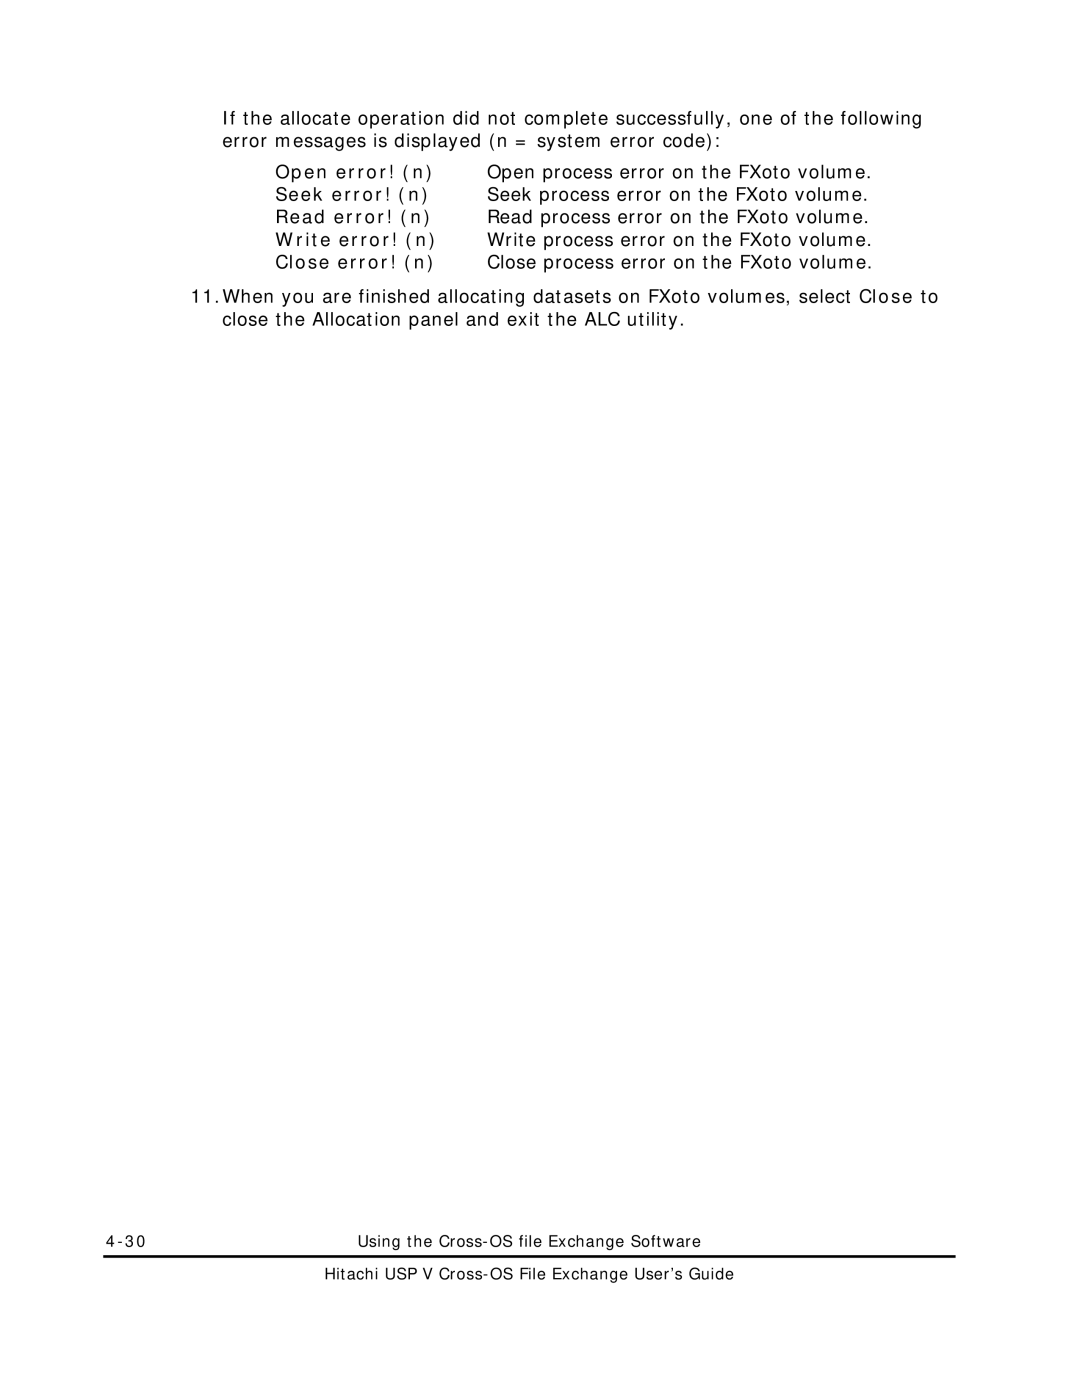 Hitachi MK-96RD647-01 manual Hitachi USP V Cross-OS File Exchange User’s Guide 